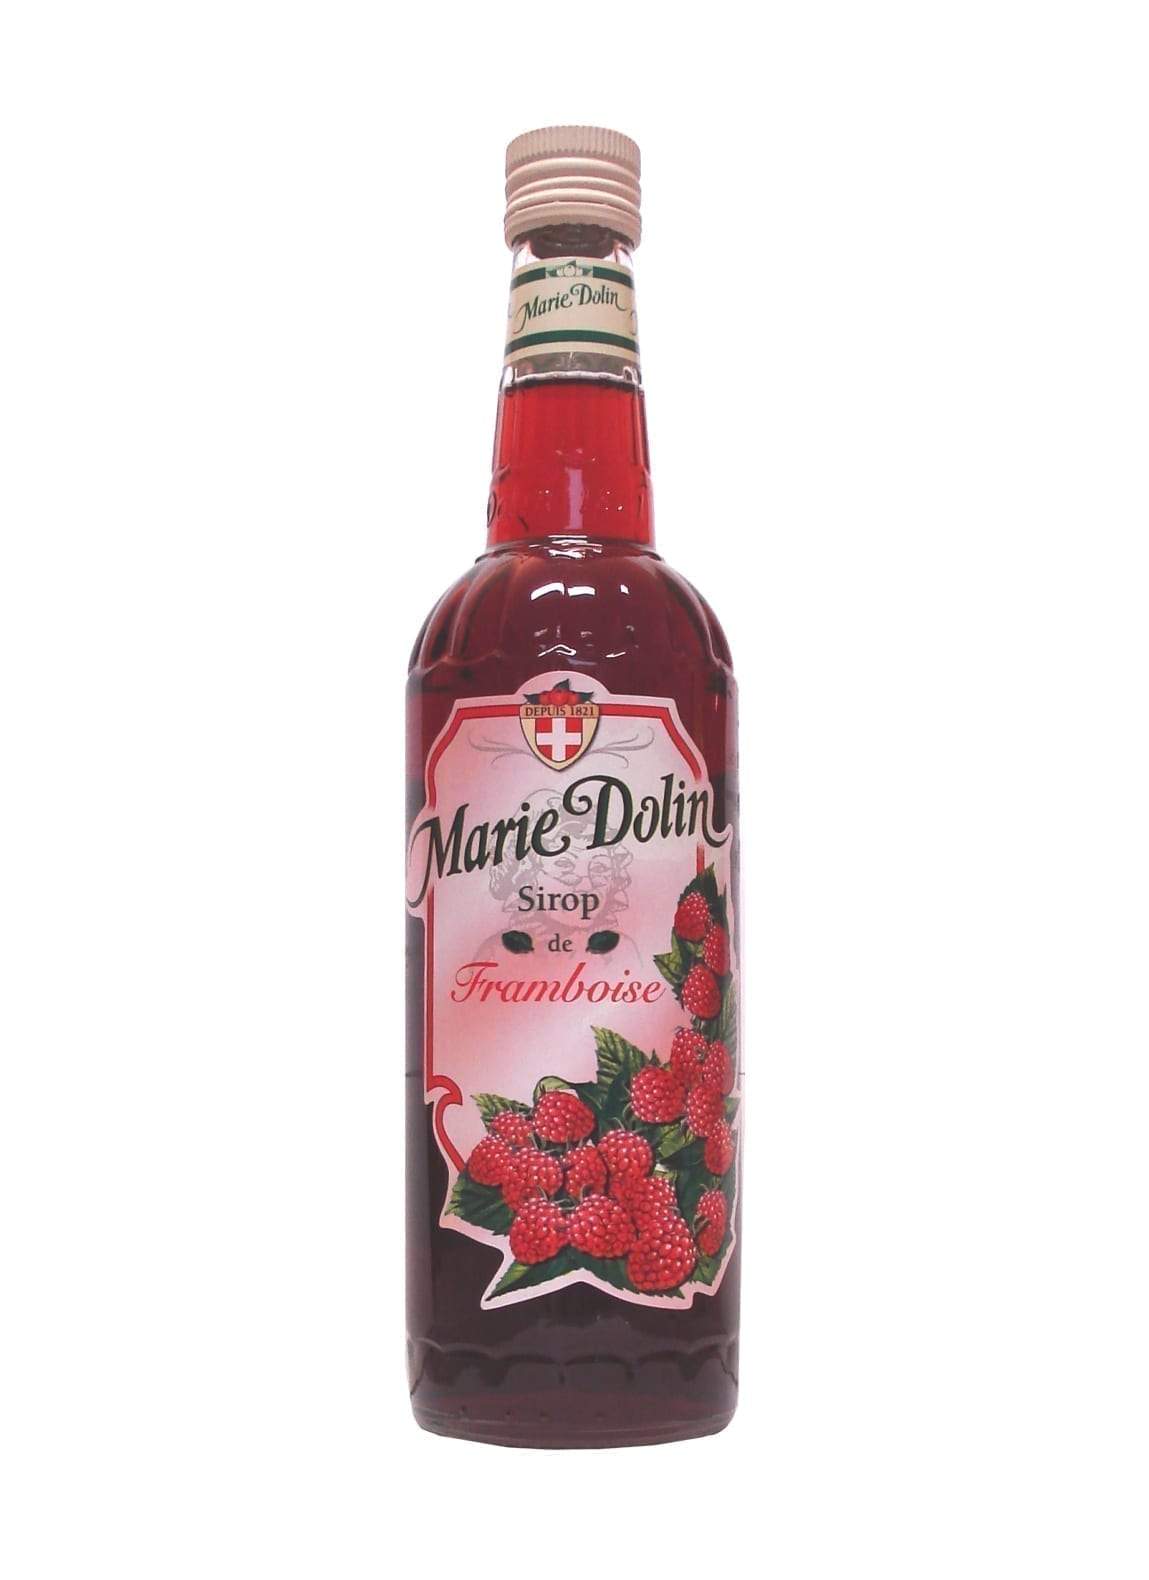 Marie Dolin Sirop de Framboise (Raspberry) Syrup 700ml